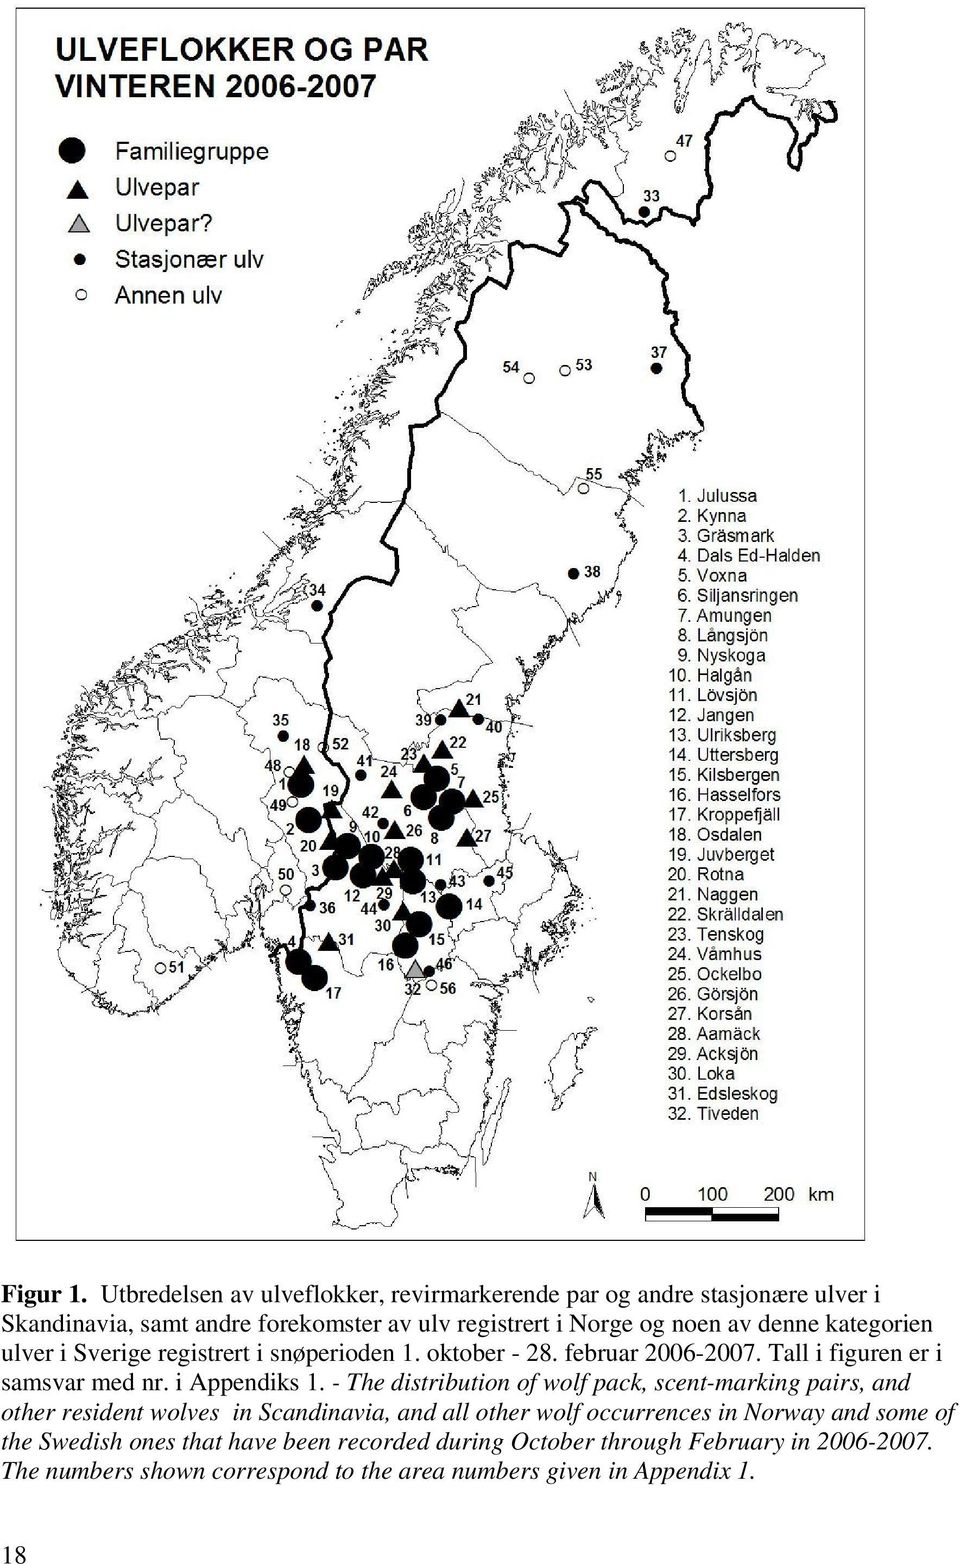 denne kategorien ulver i Sverige registrert i snøperioden 1. oktober - 28. februar 2006-2007. Tall i figuren er i samsvar med nr. i Appendiks 1.